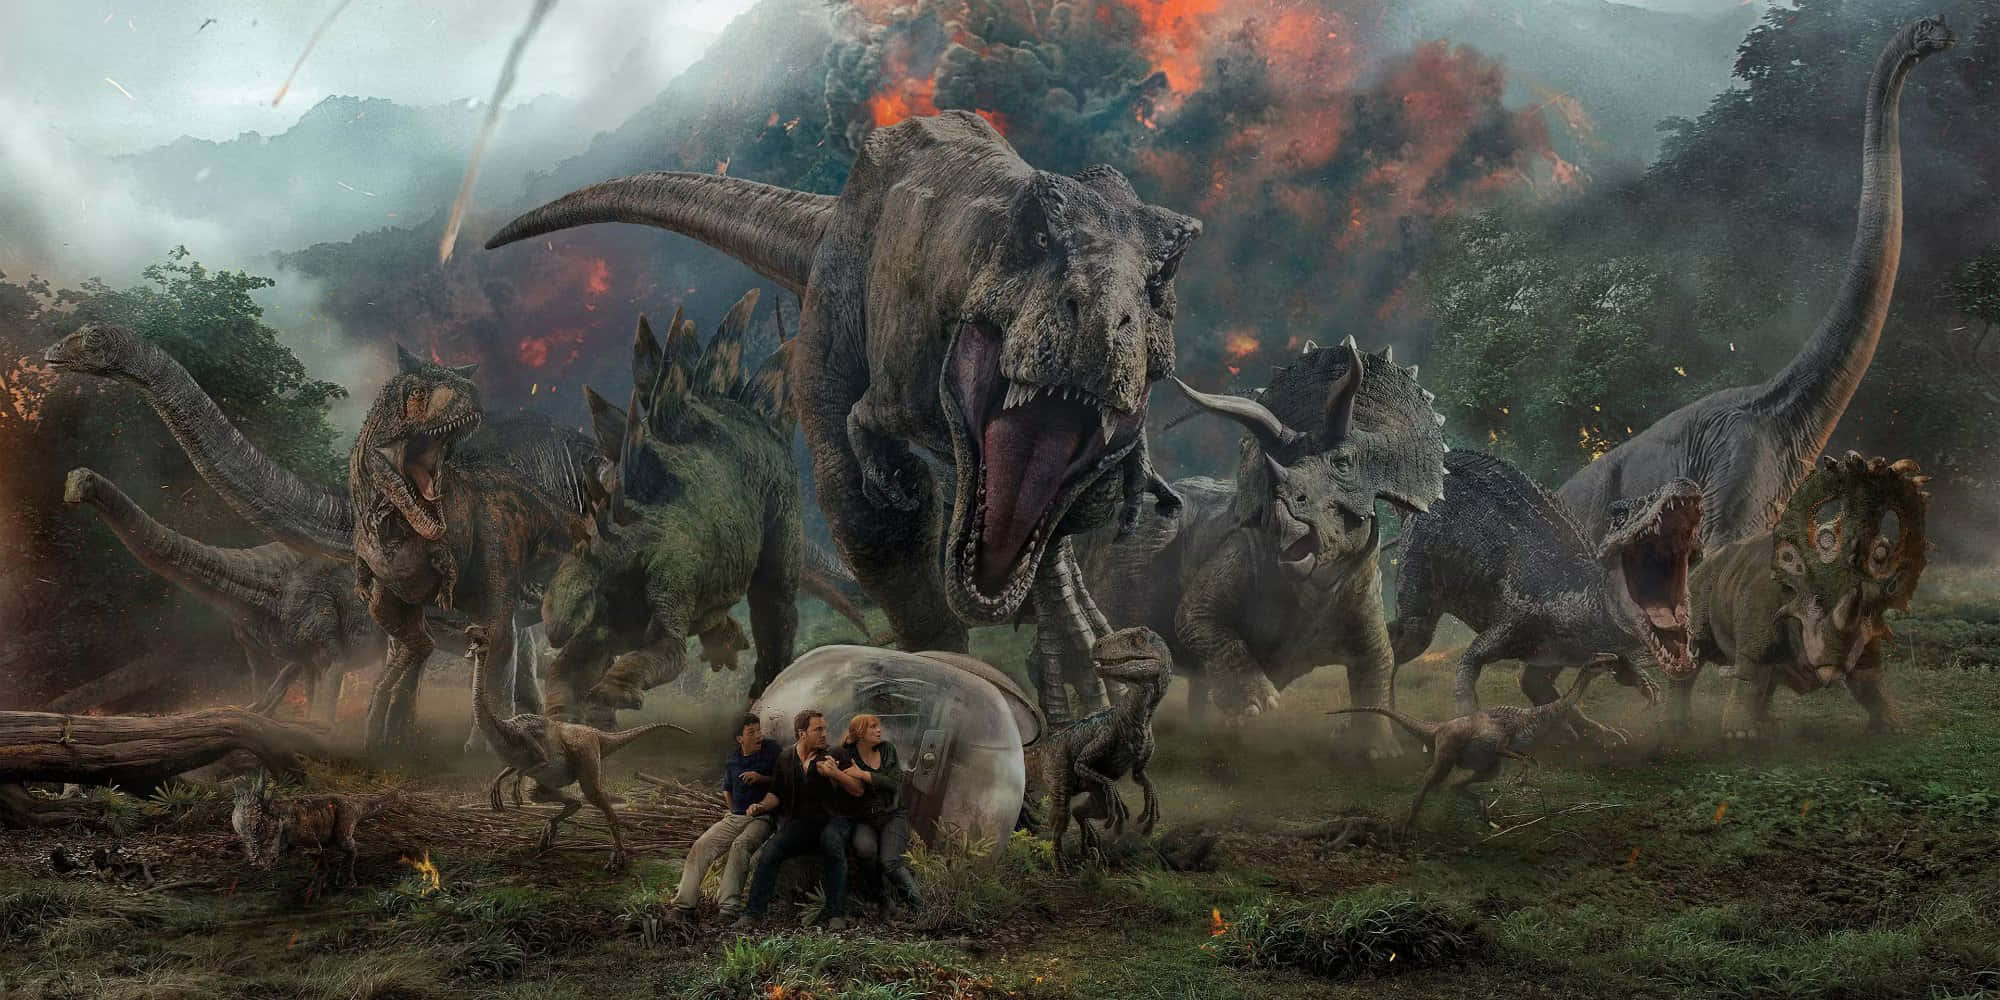 “Return to the thrilling world of Jurassic Park”